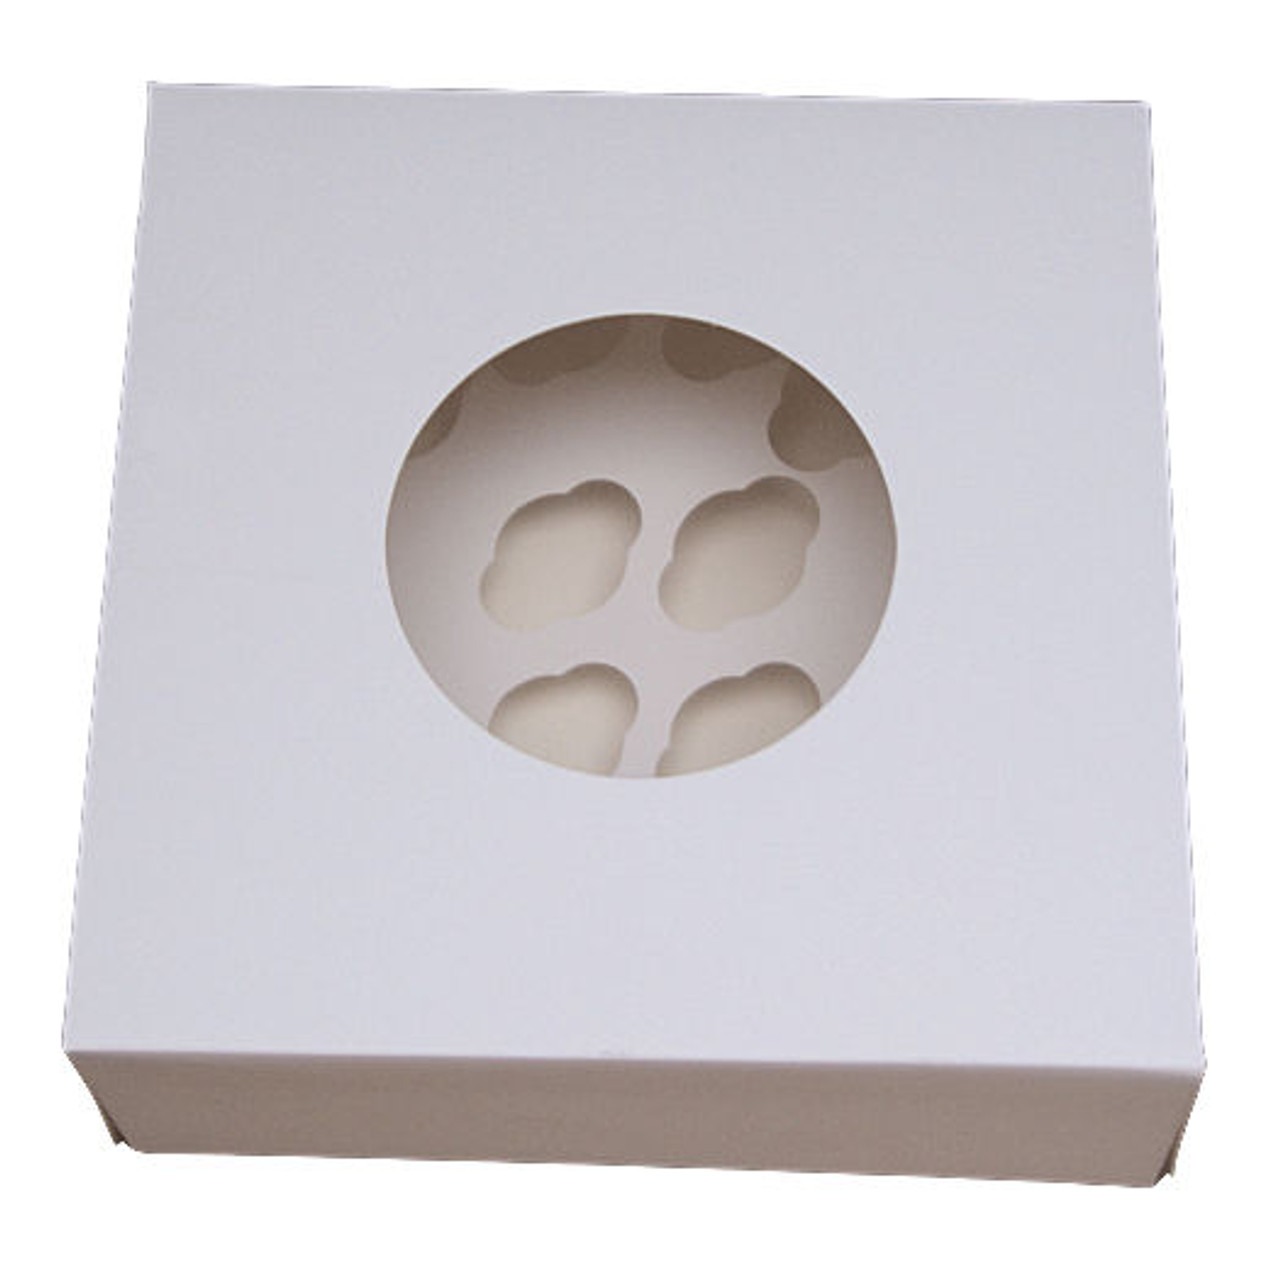 Pack x 10  Cardboard White 9 Cupcake or 20 Mini Cupcake box with window